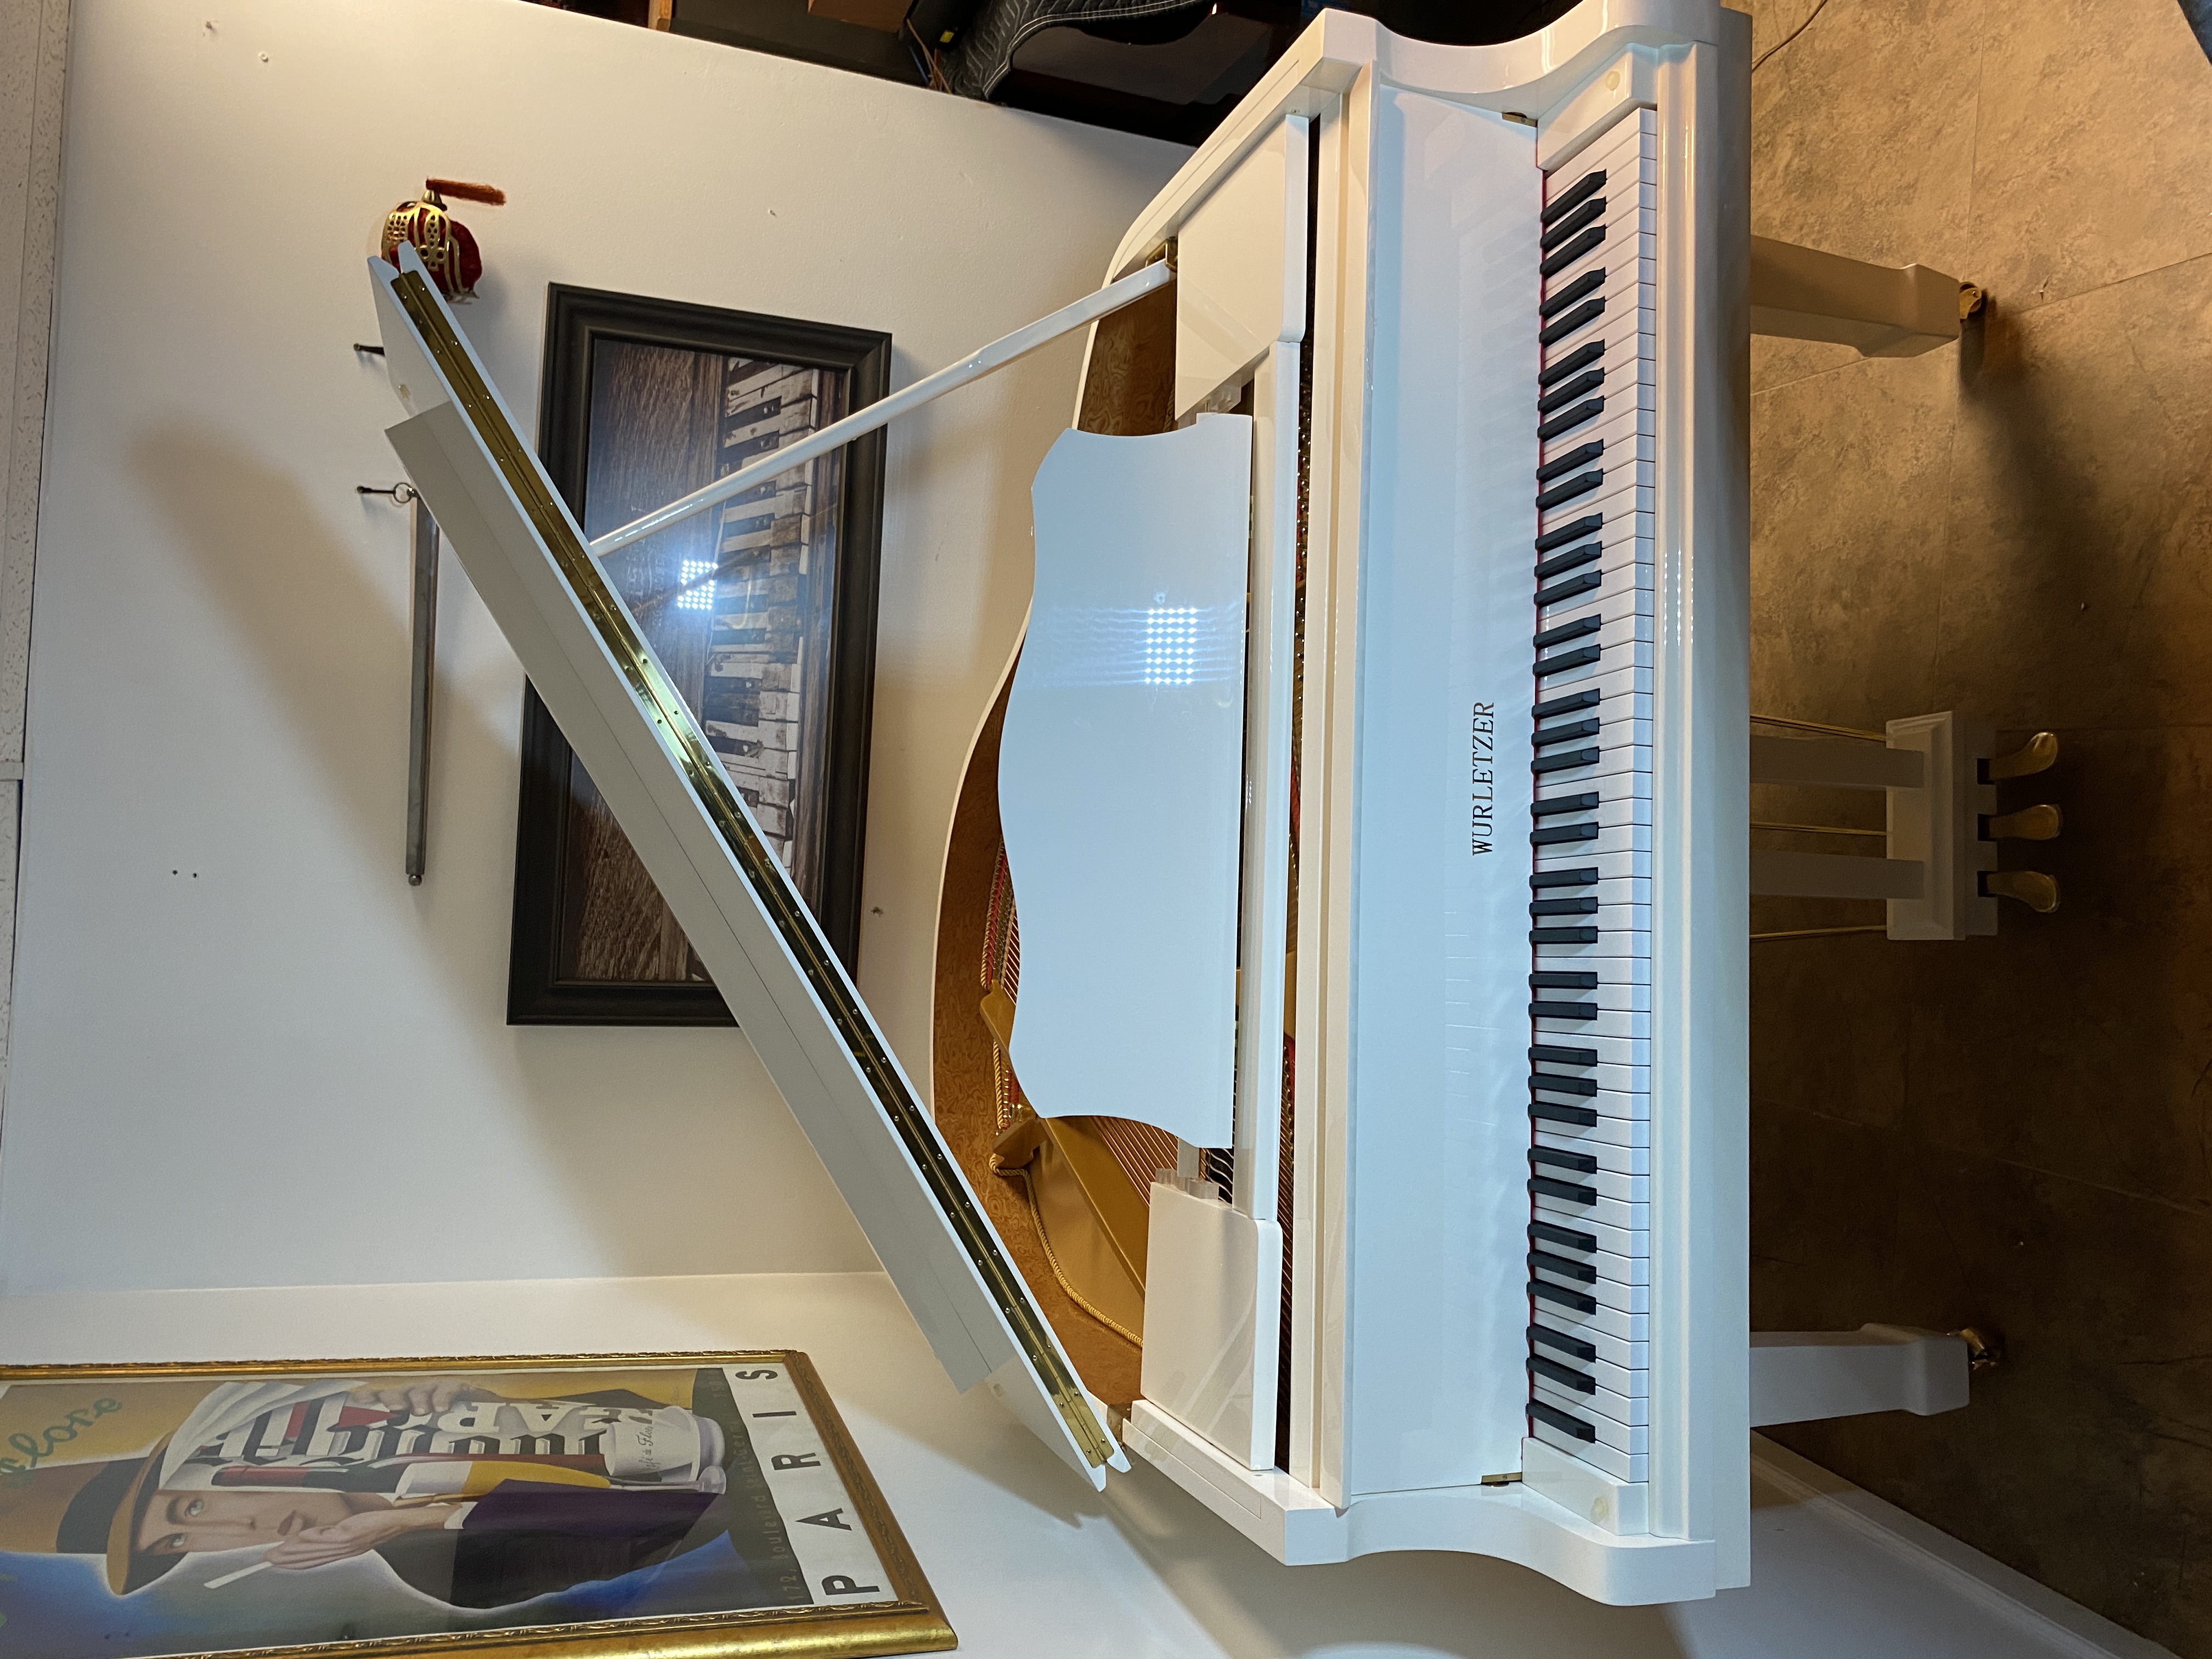 Snow white Wurletzer 4’11 baby grand piano